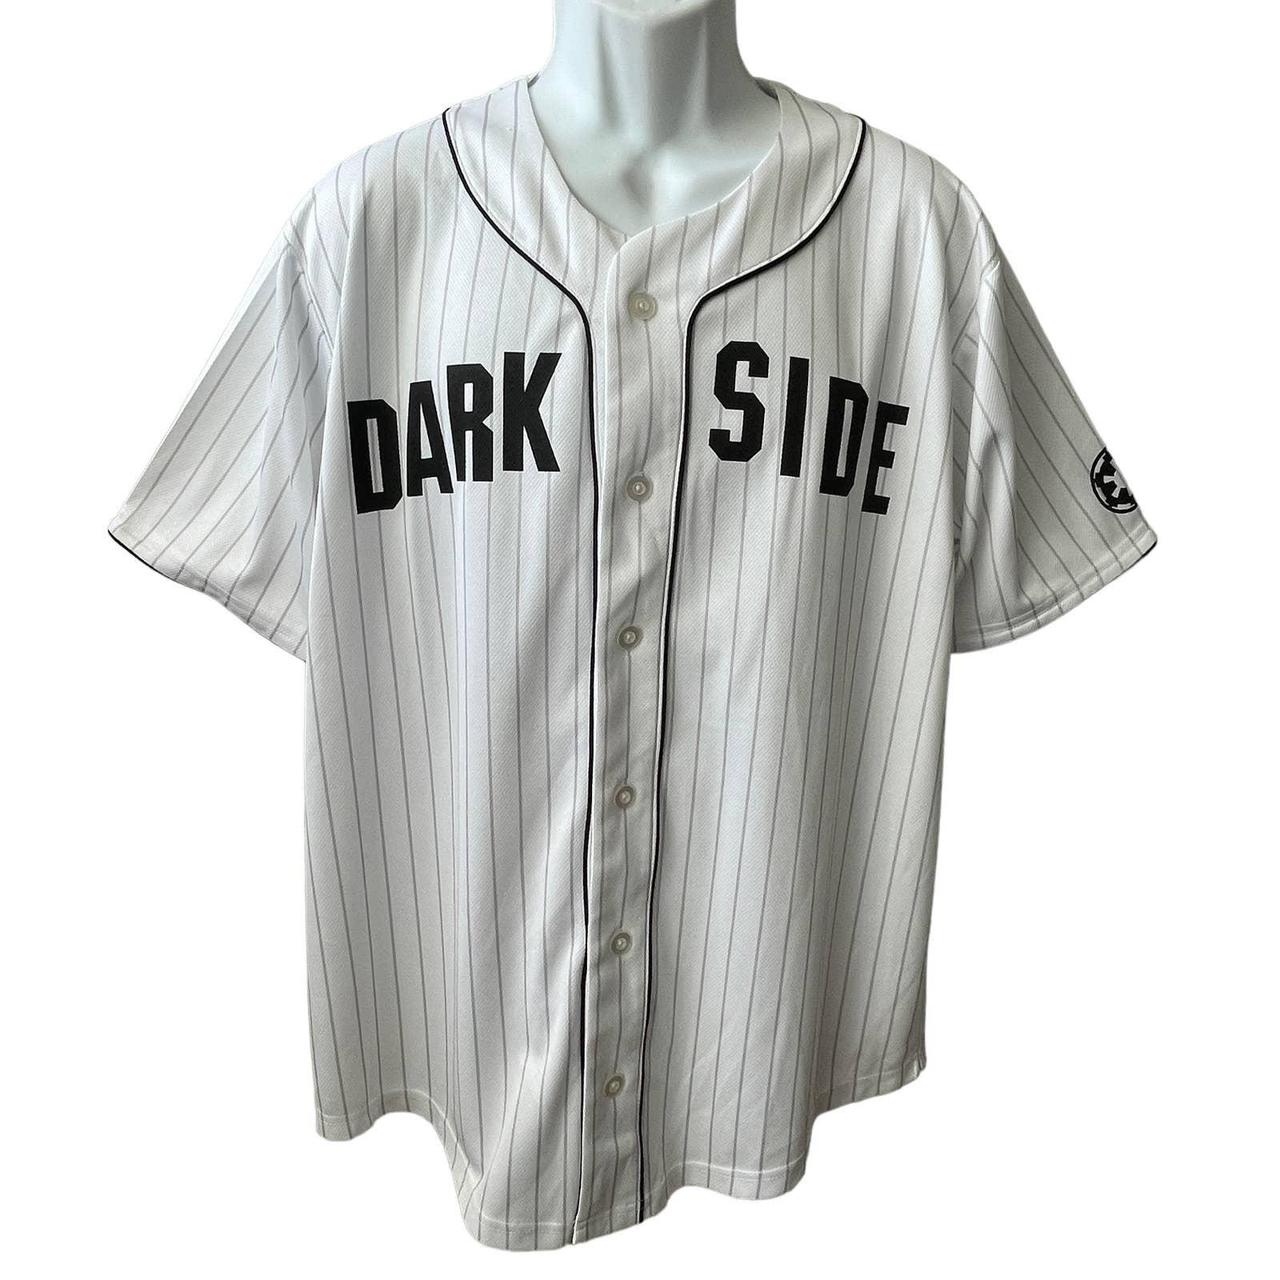 Star Wars Darkside Baseball Jersey